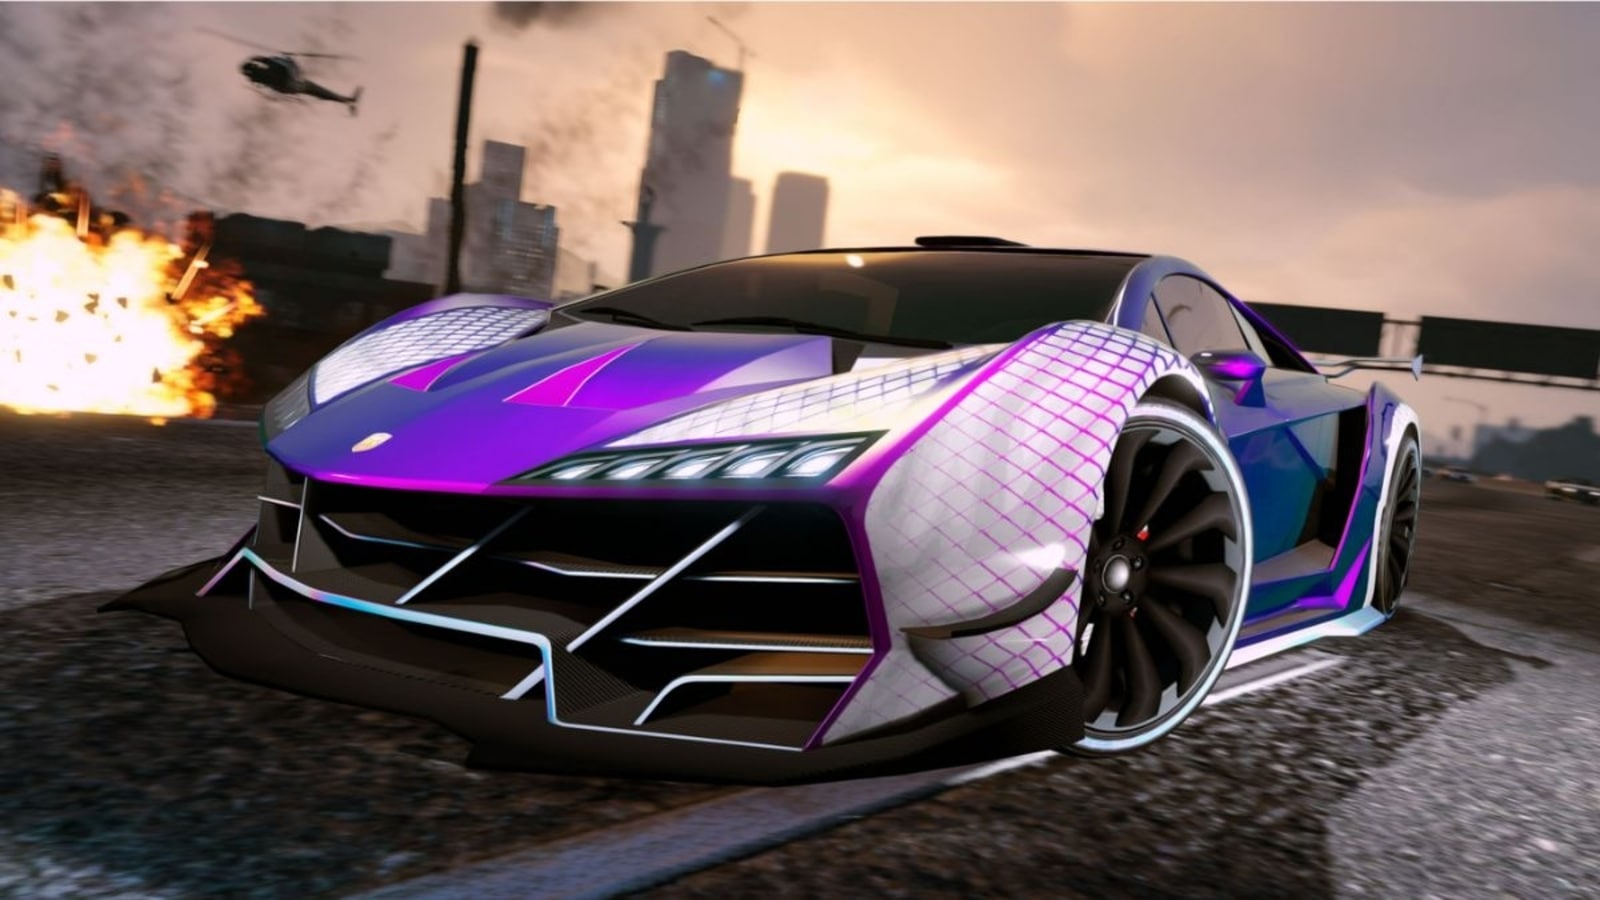 Grand Theft Auto 6 Price Rumors Spark Debate: Will GTA 6 Cost a